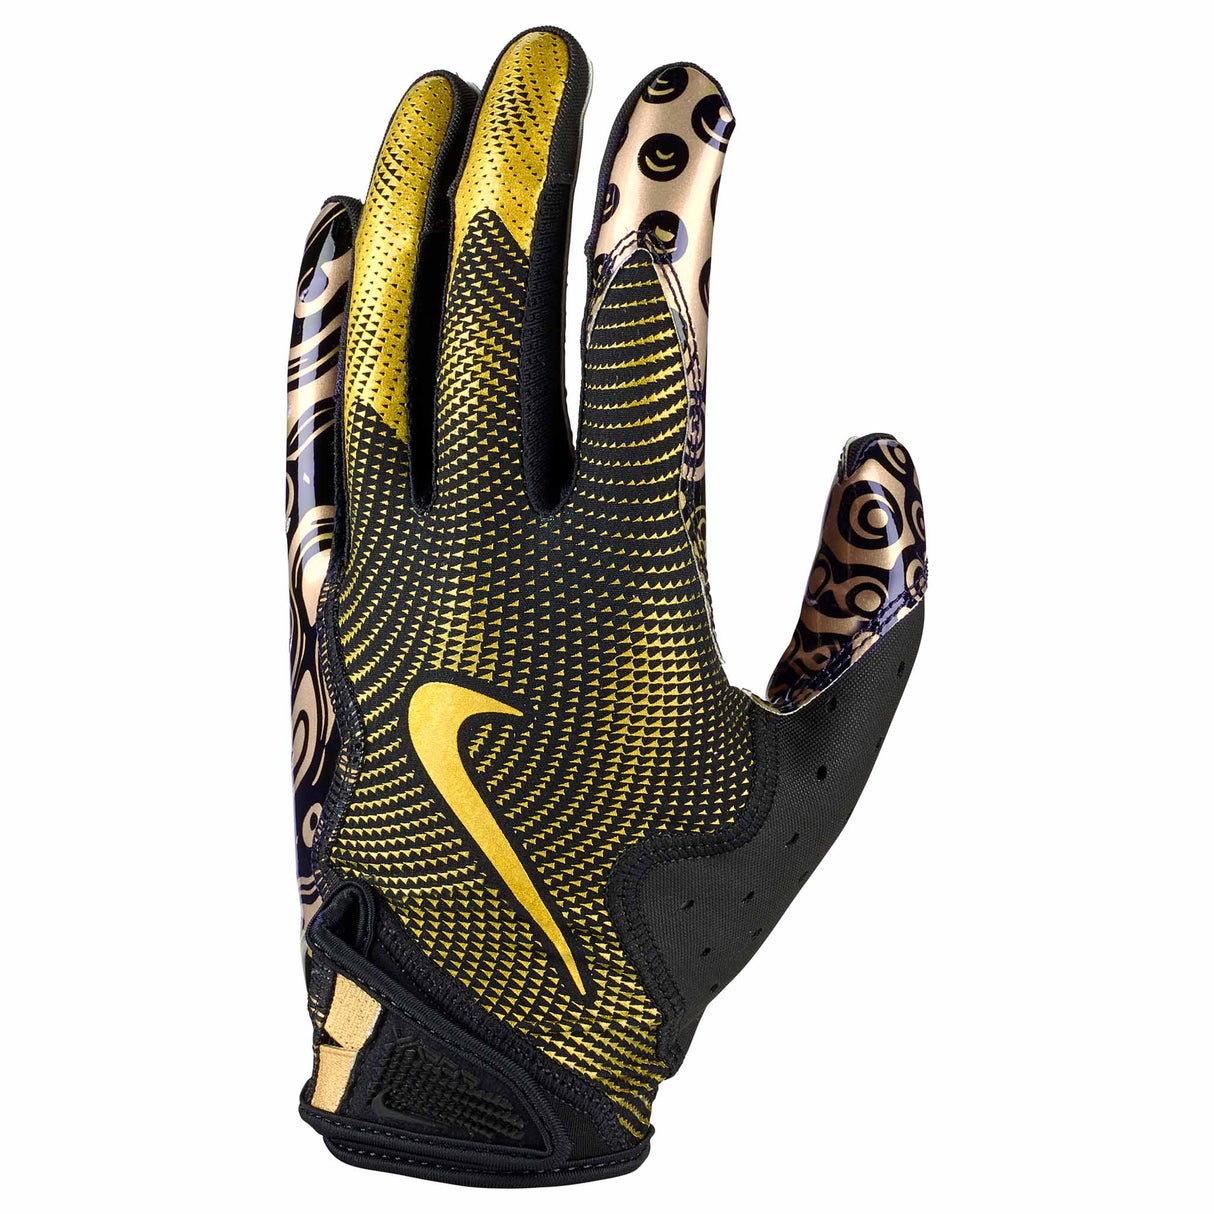 Nike Vapor Jet 8.0 FG Metallic Pack gants de football américain - Black / Metallic Gold